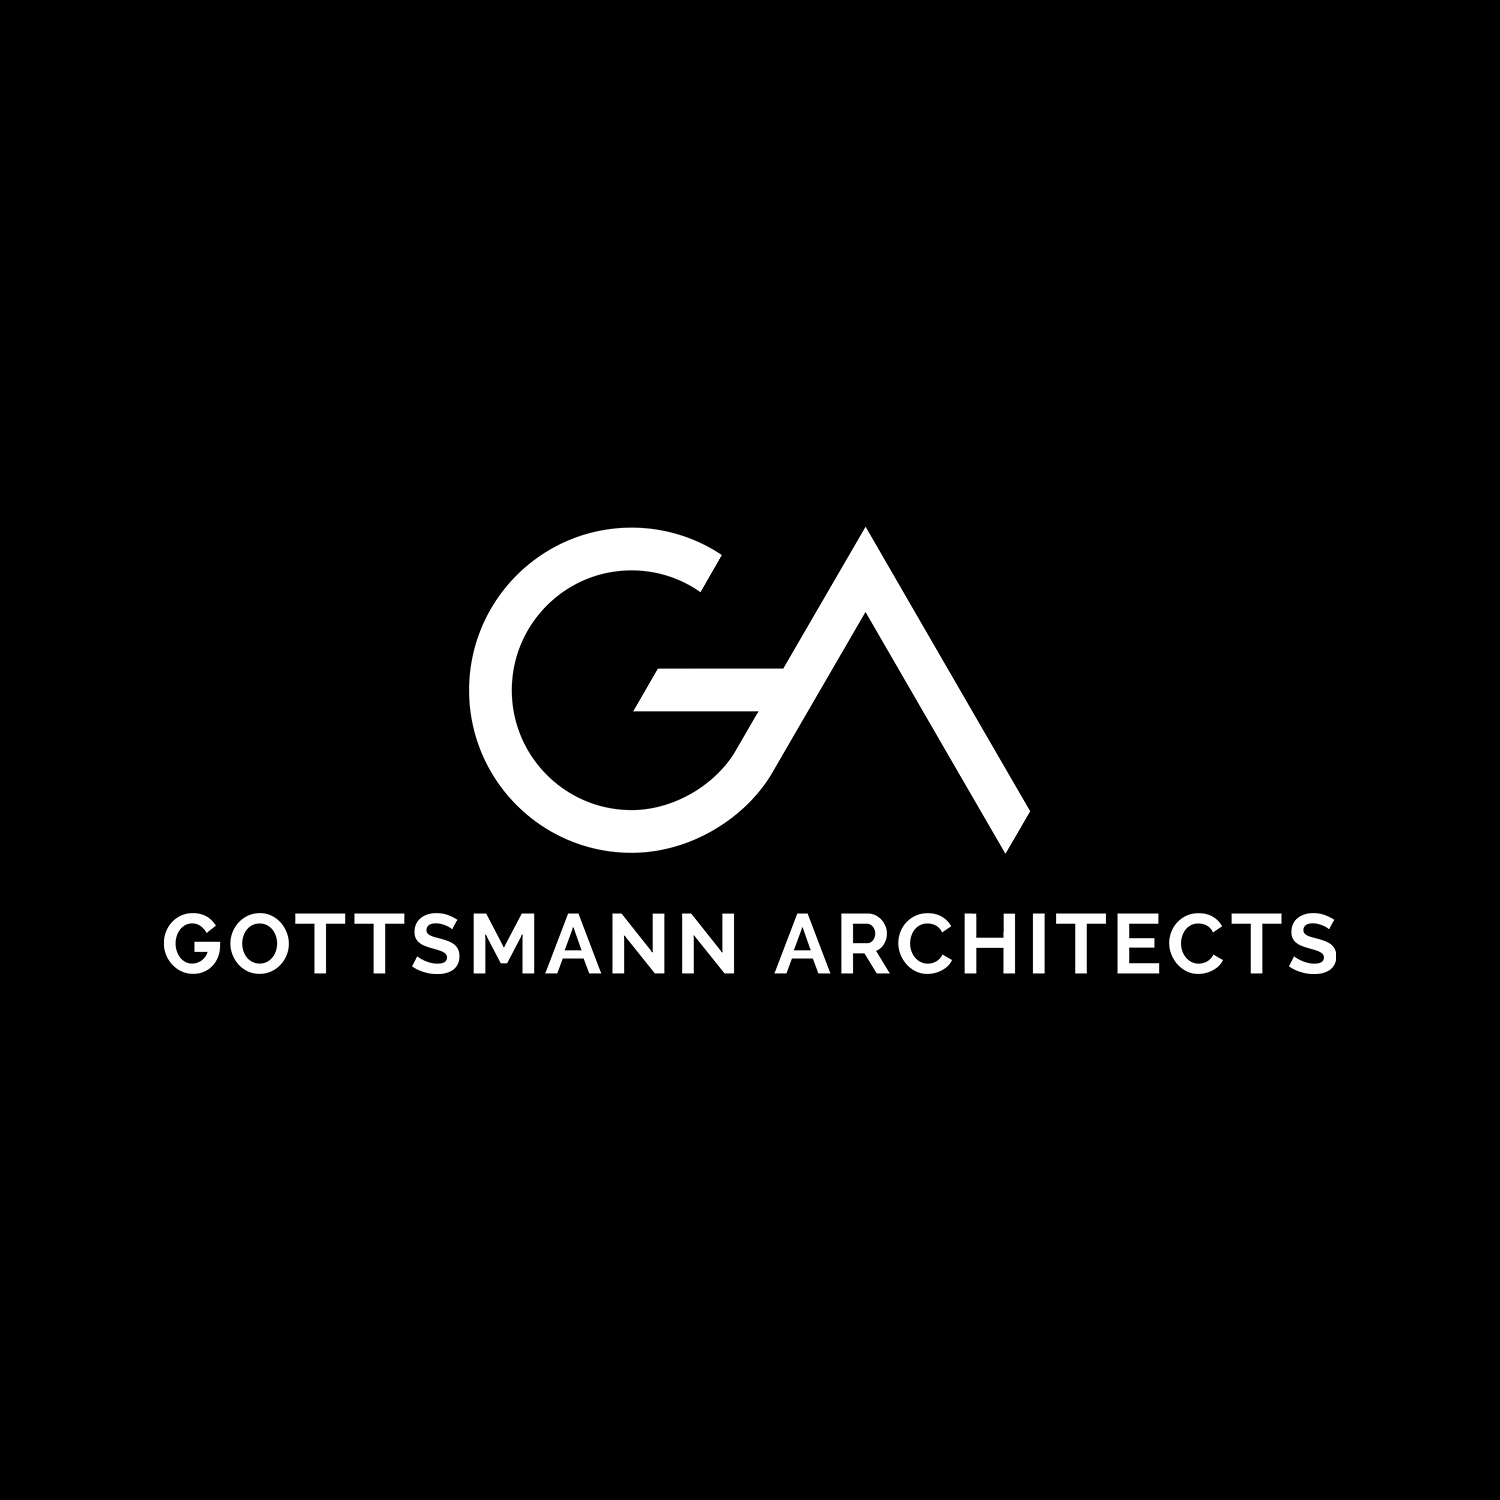 Gottsmann Architects